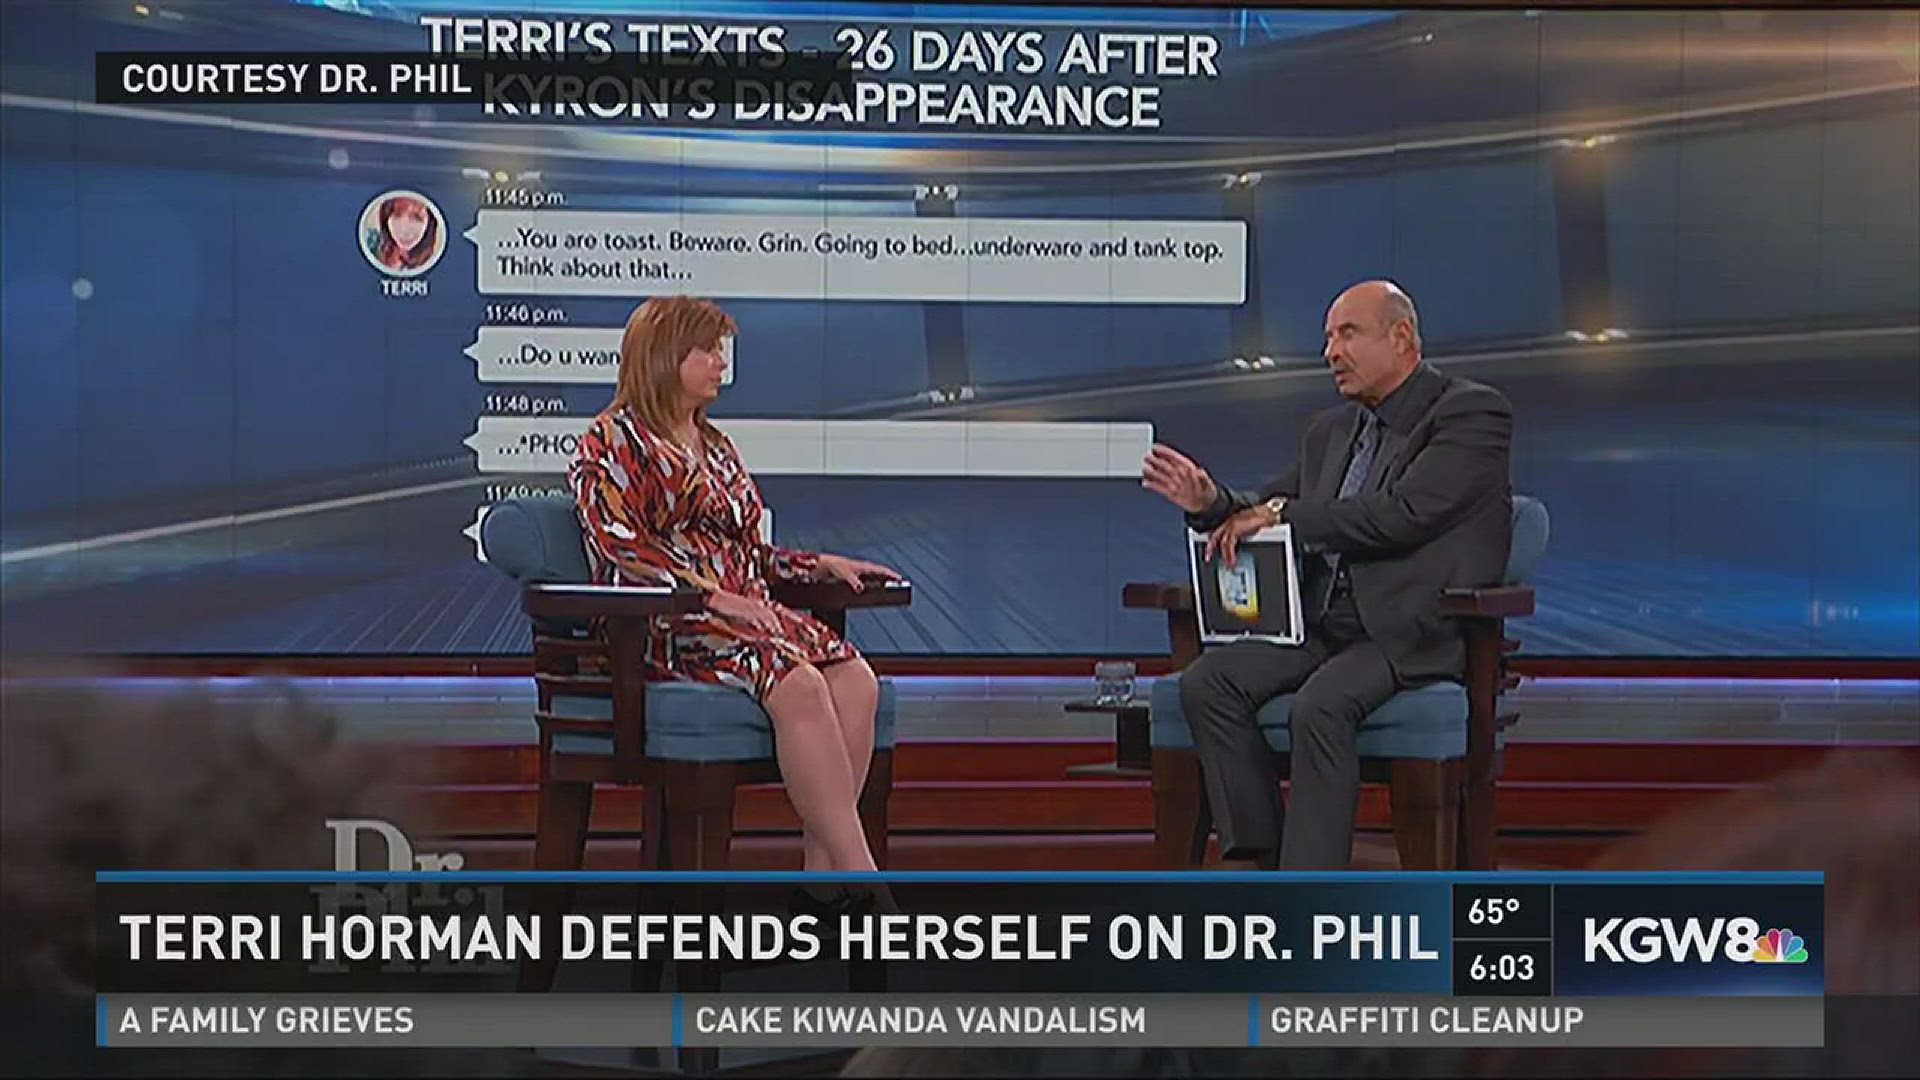 Terri Horman defends herself on Dr. Phil